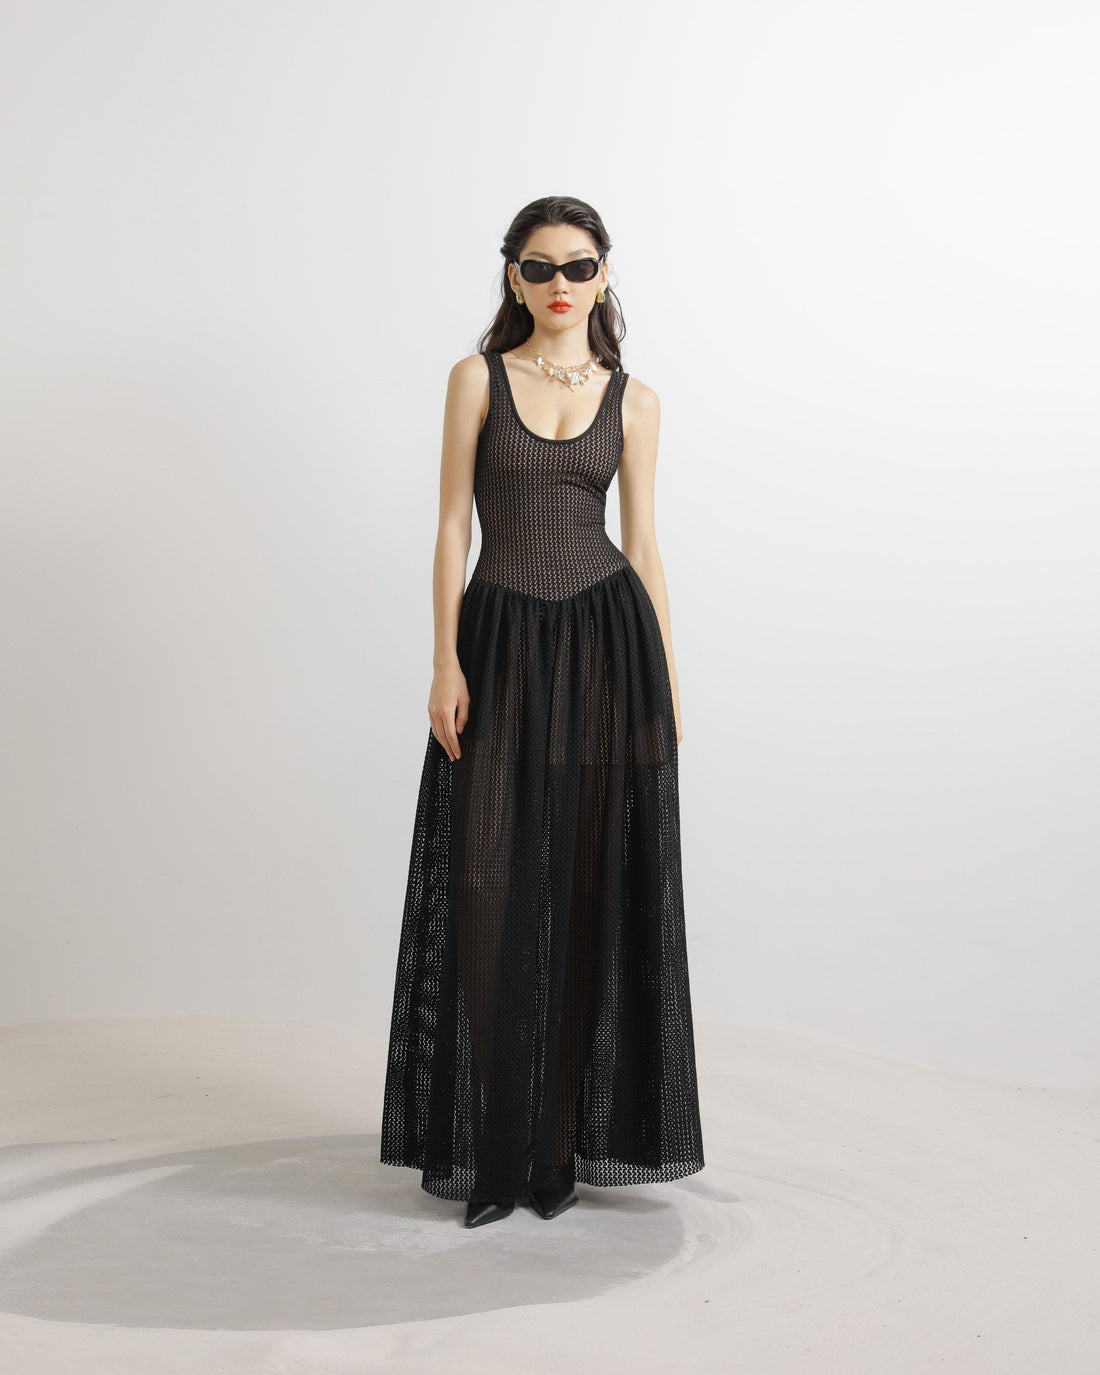 Lace Cami Midi Dress in Black